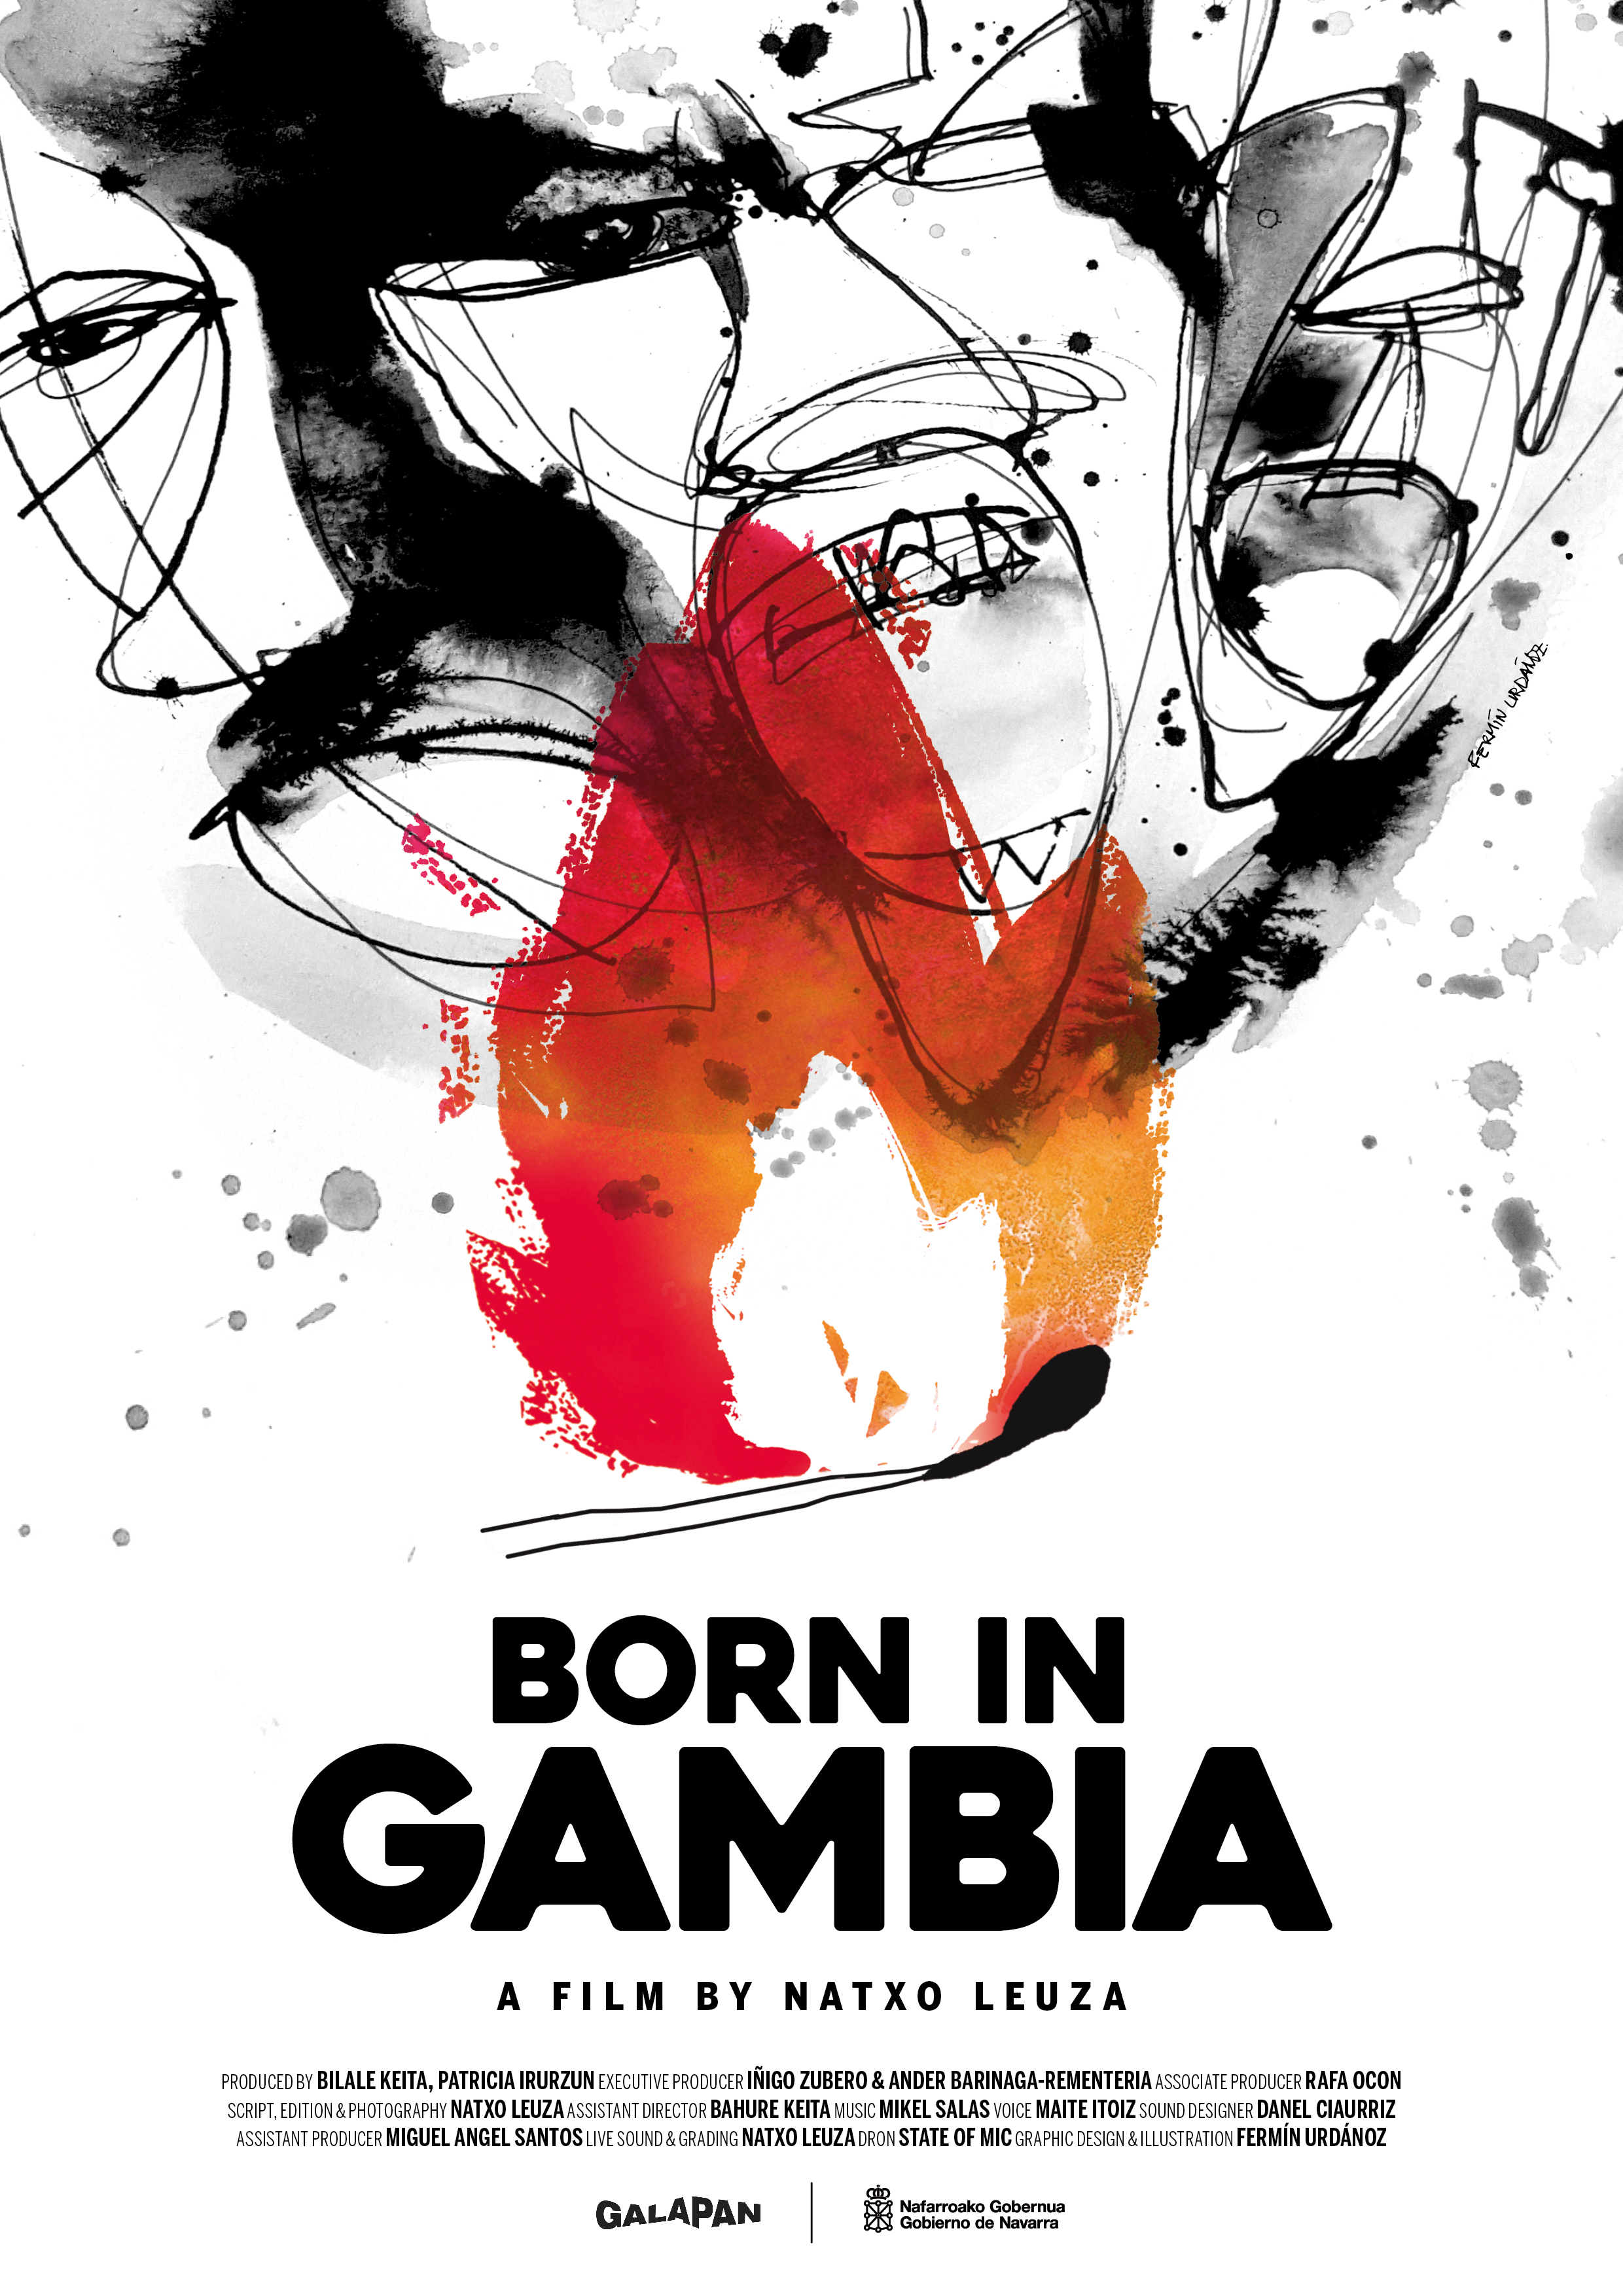 BORN IN GAMBIA